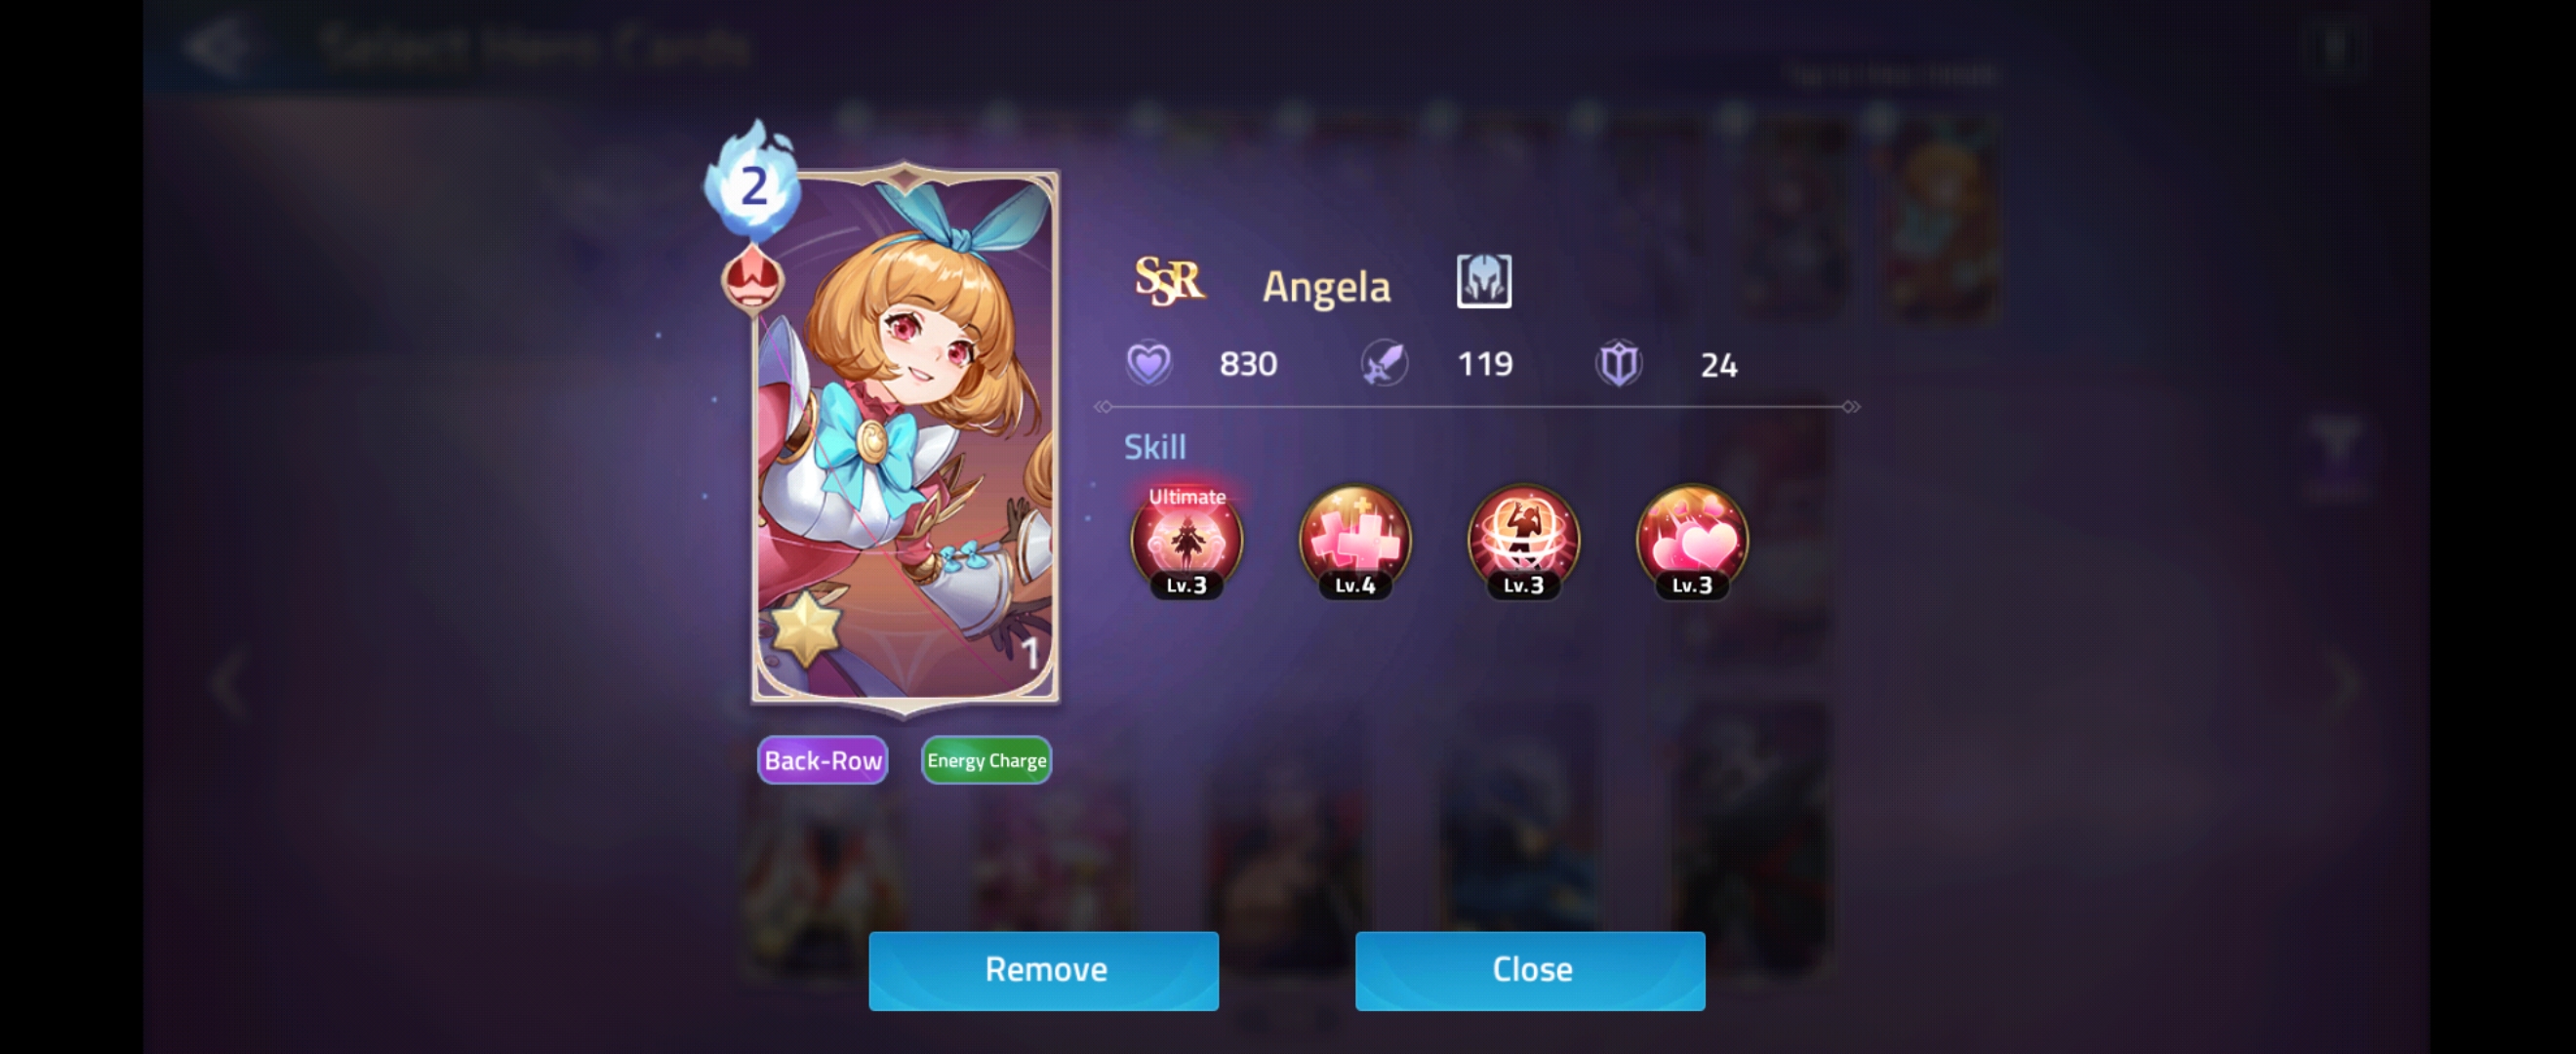 angela-mobile-legends-adventure